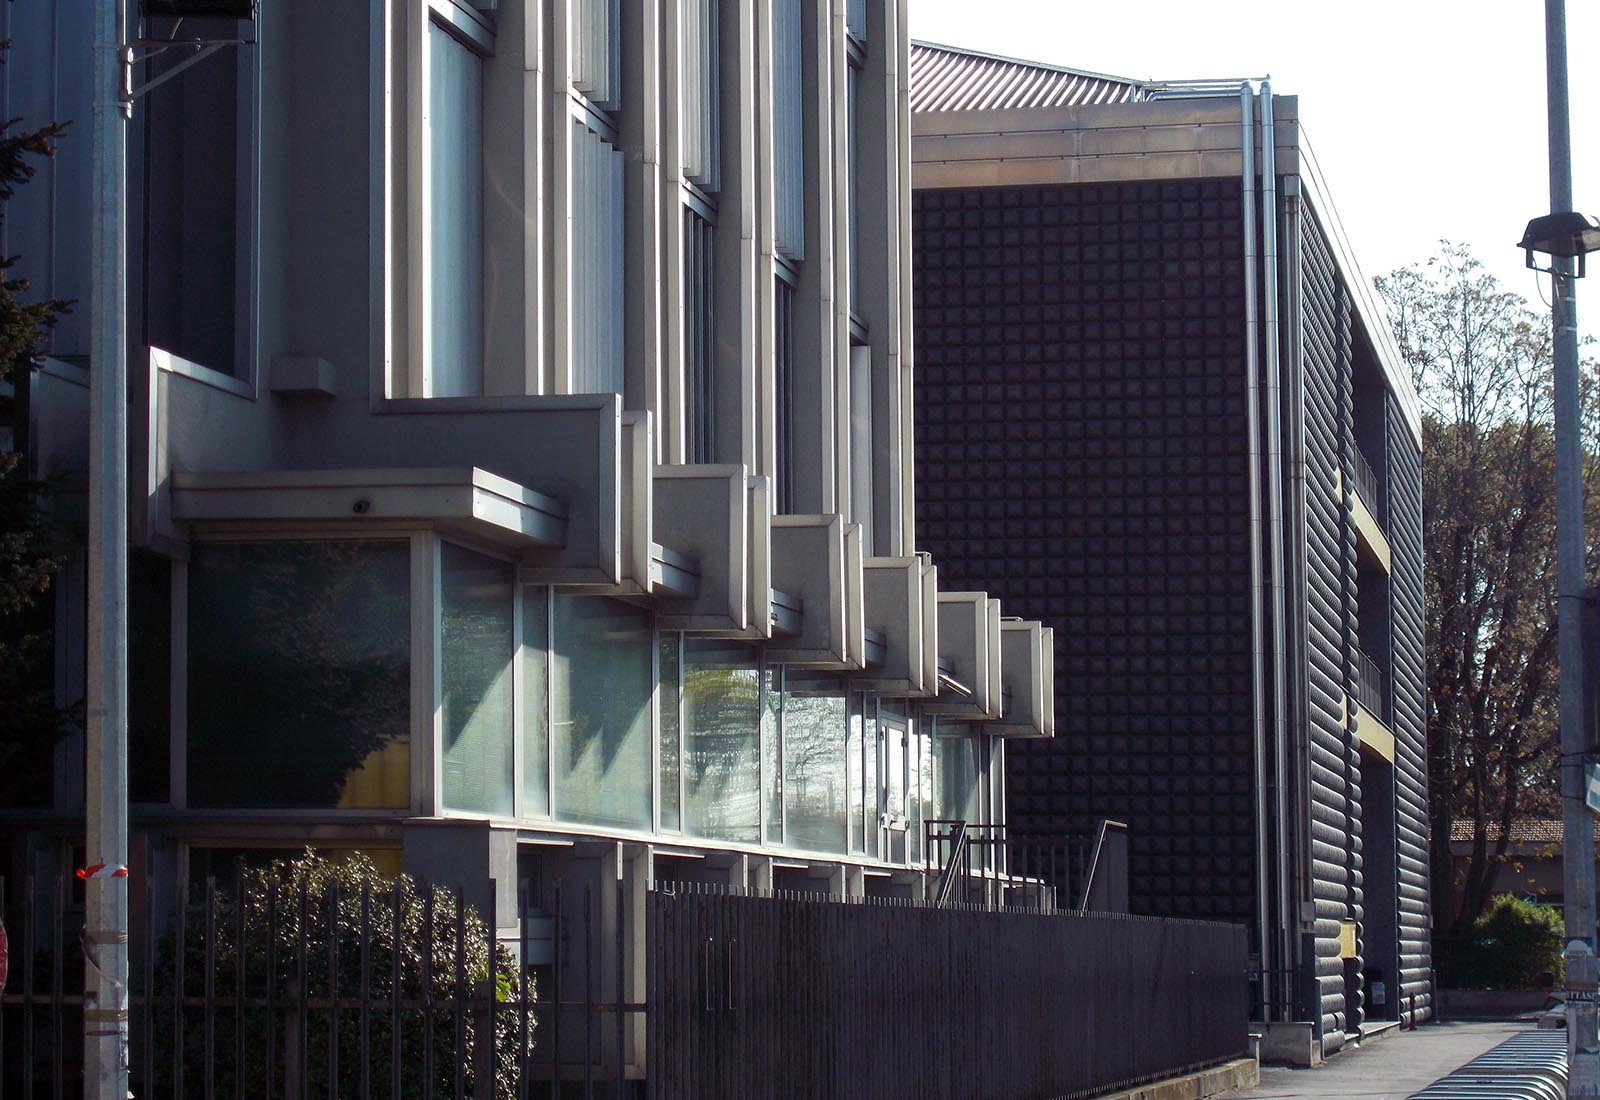 Building 24 Politecnico di Milano - View of the South facade